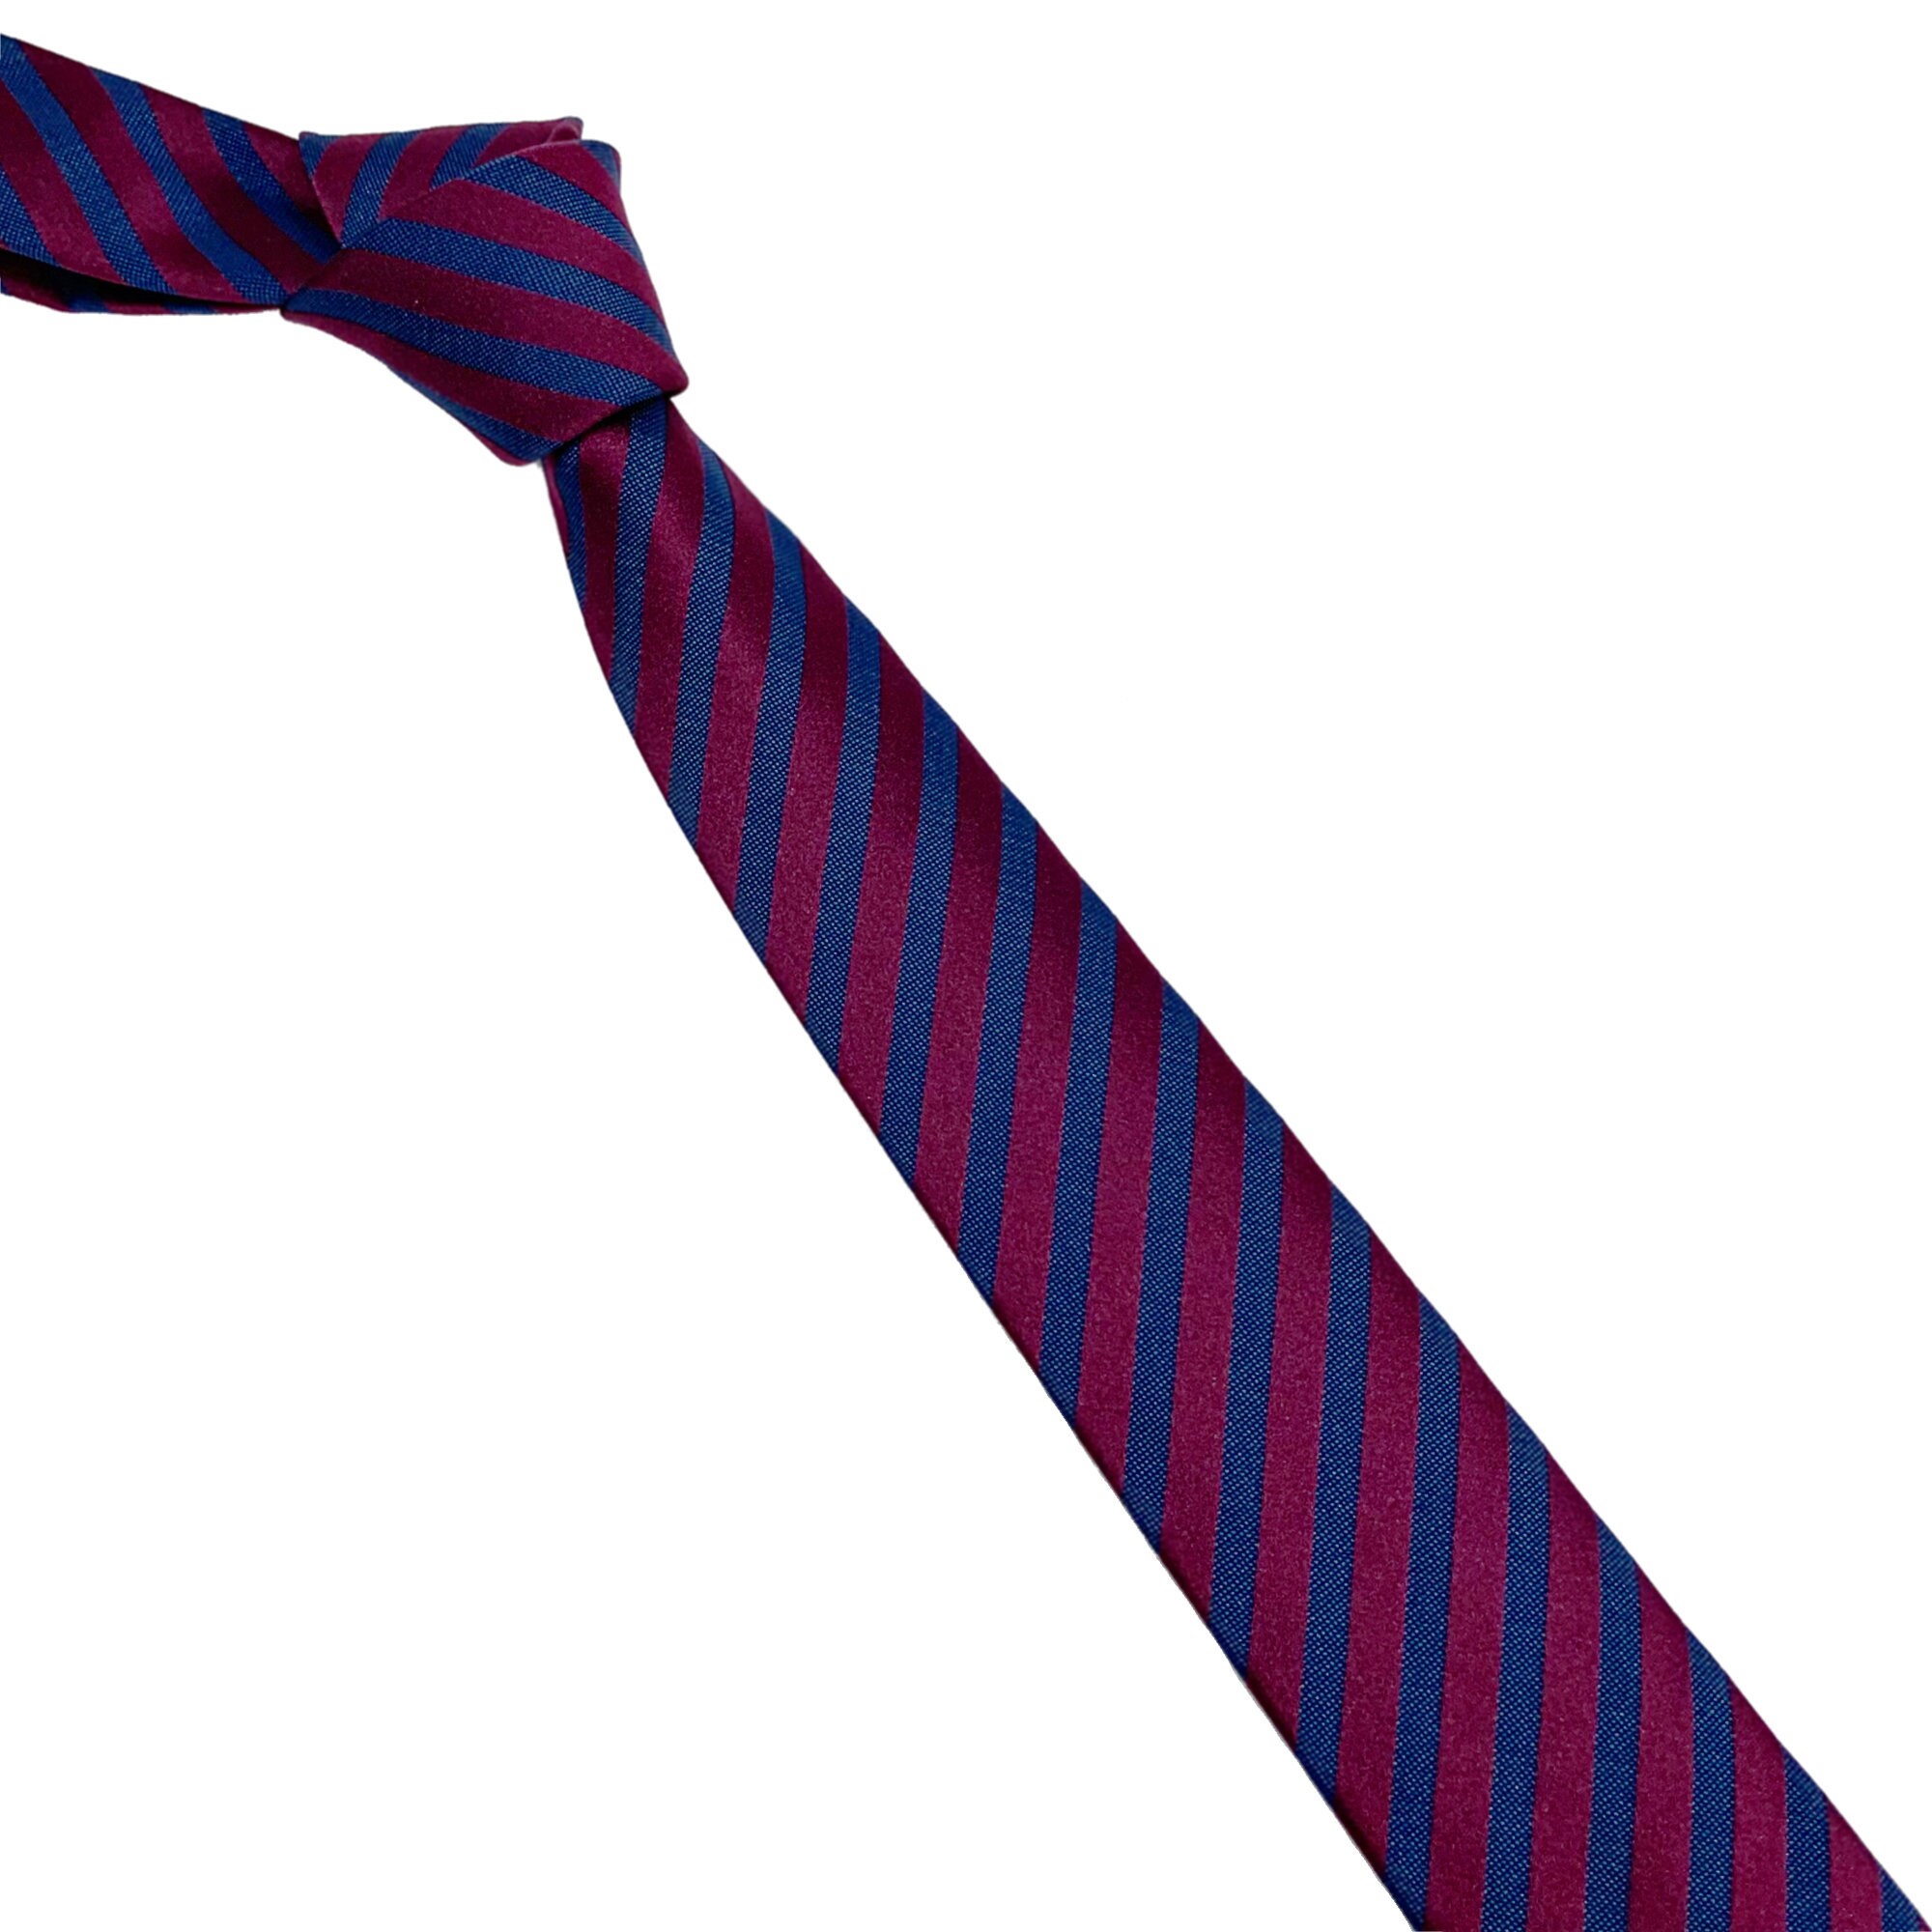 Burgundy and dark blue diagonal striped tie 2.36 6cm | Etsy